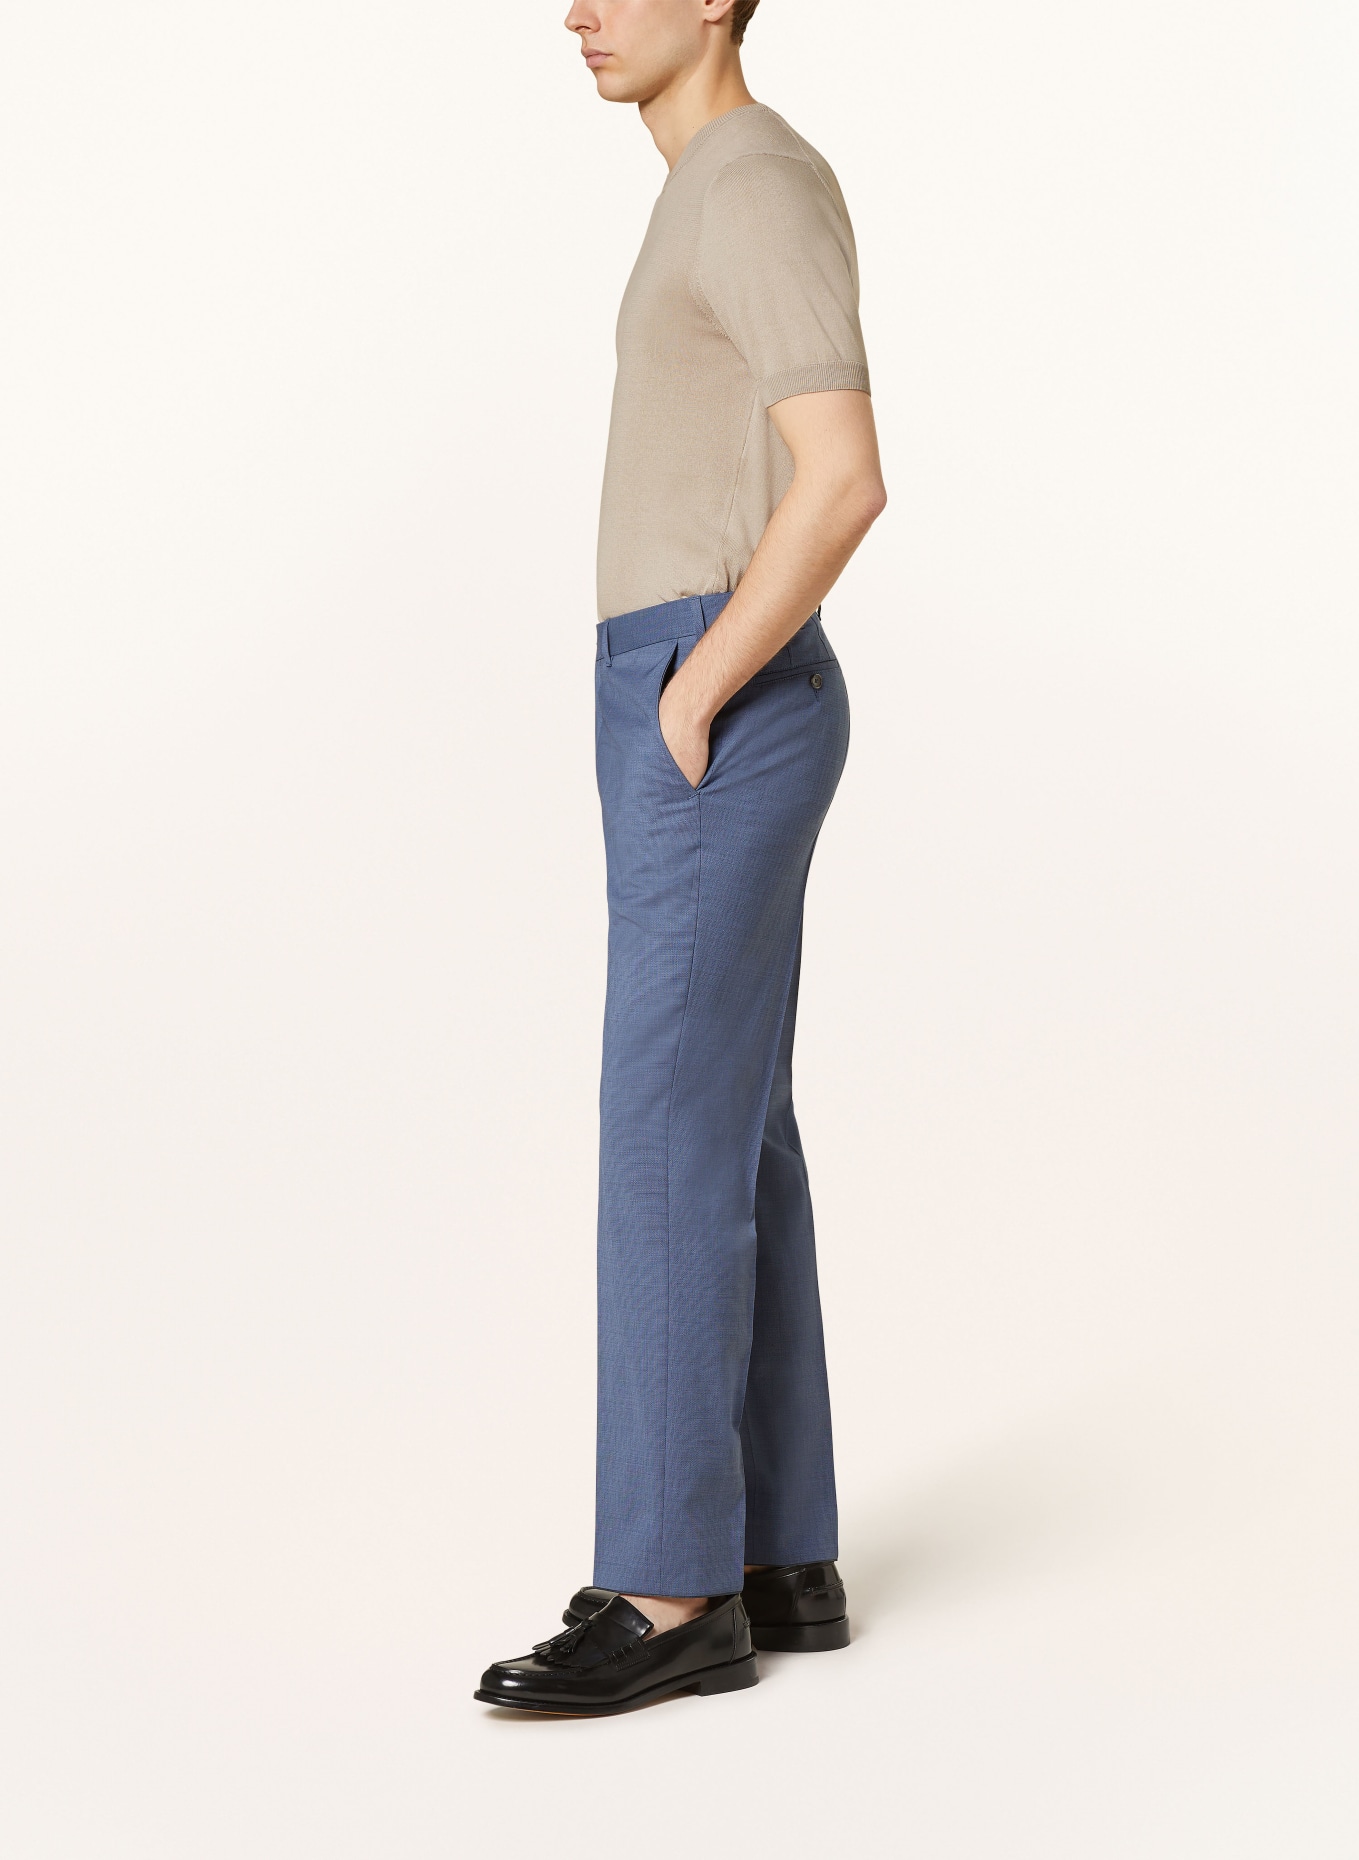 EDUARD DRESSLER Anzughose Slim Fit, Farbe: 036 hellblau (Bild 5)